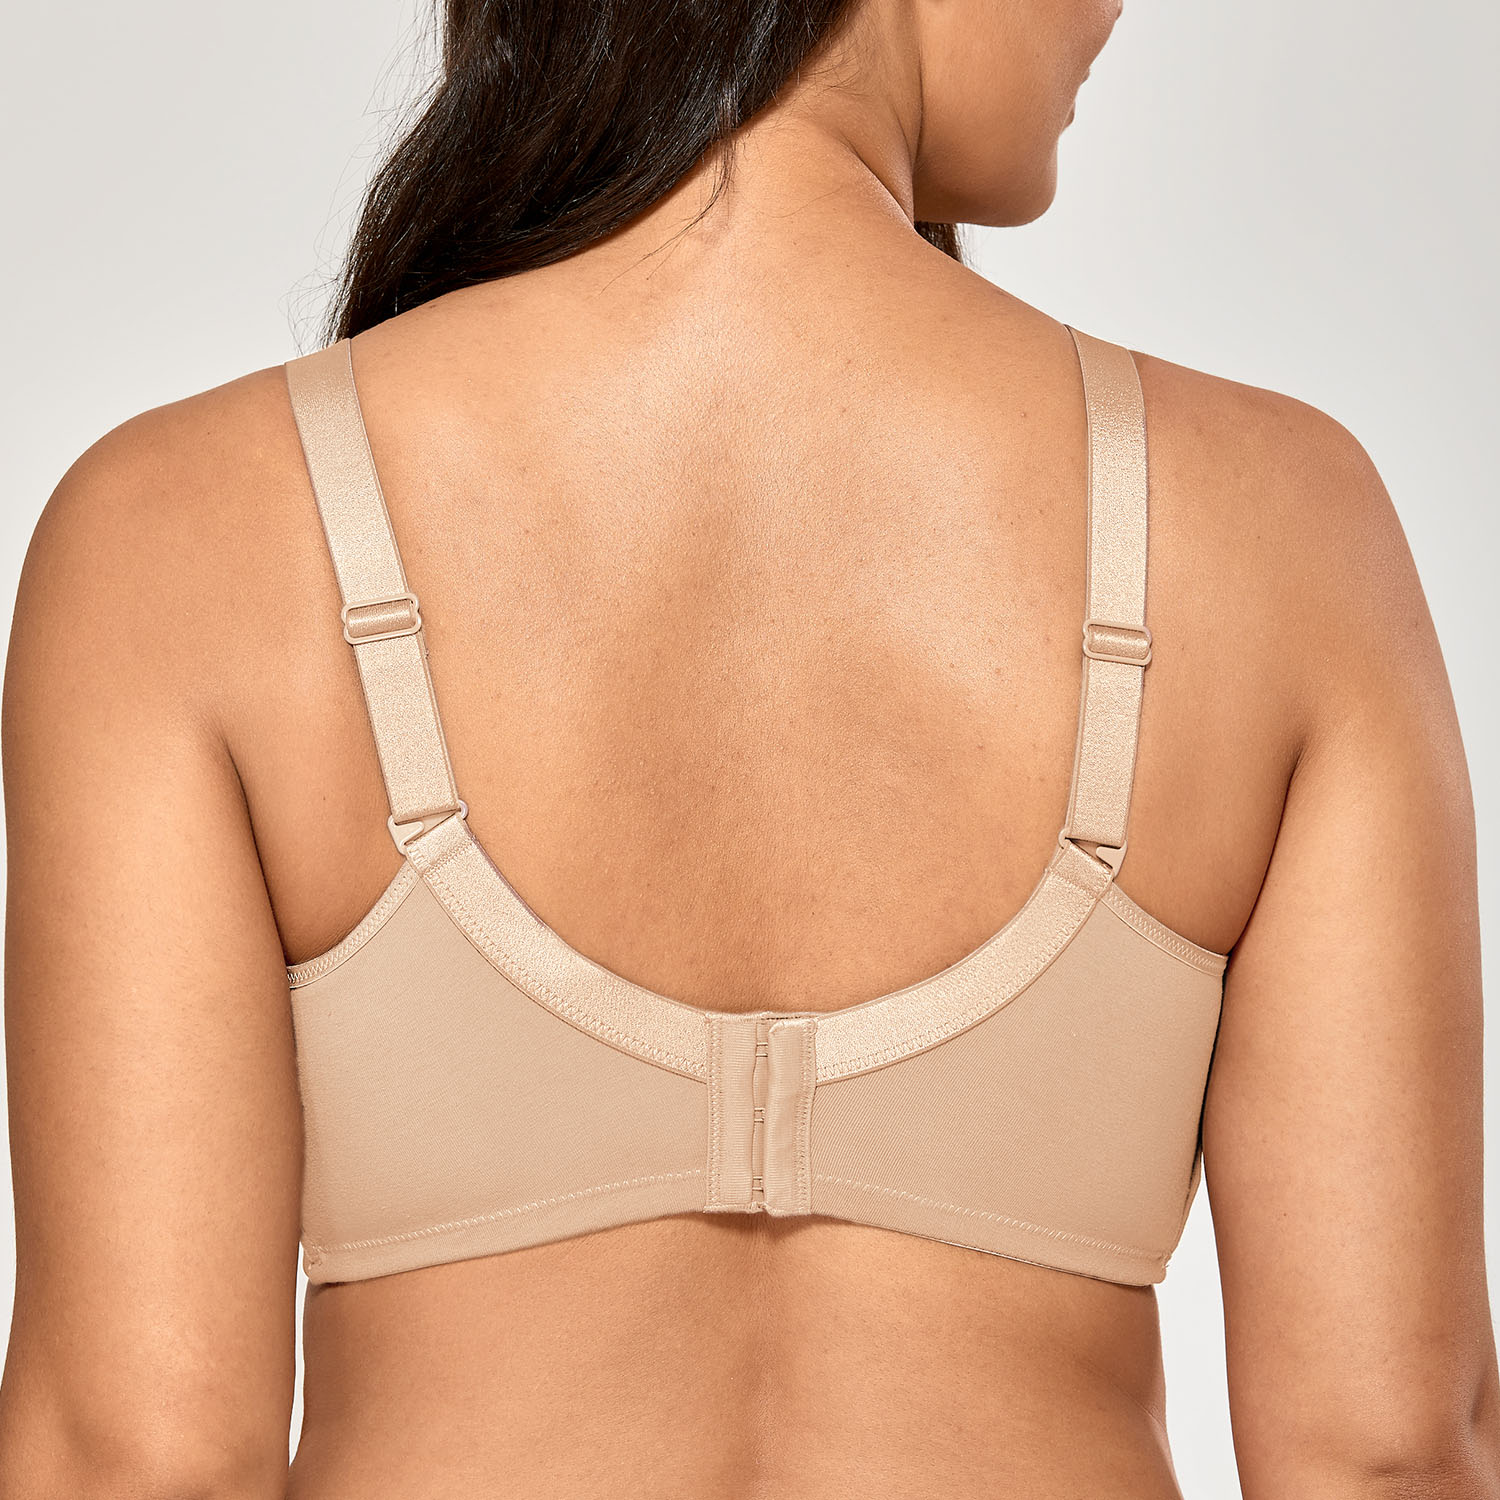 DELIMIRA Women's Mastectomy Pocket Bra Full Cup Cotton Wireless Comfort  Barely Buff 34C : : Fashion